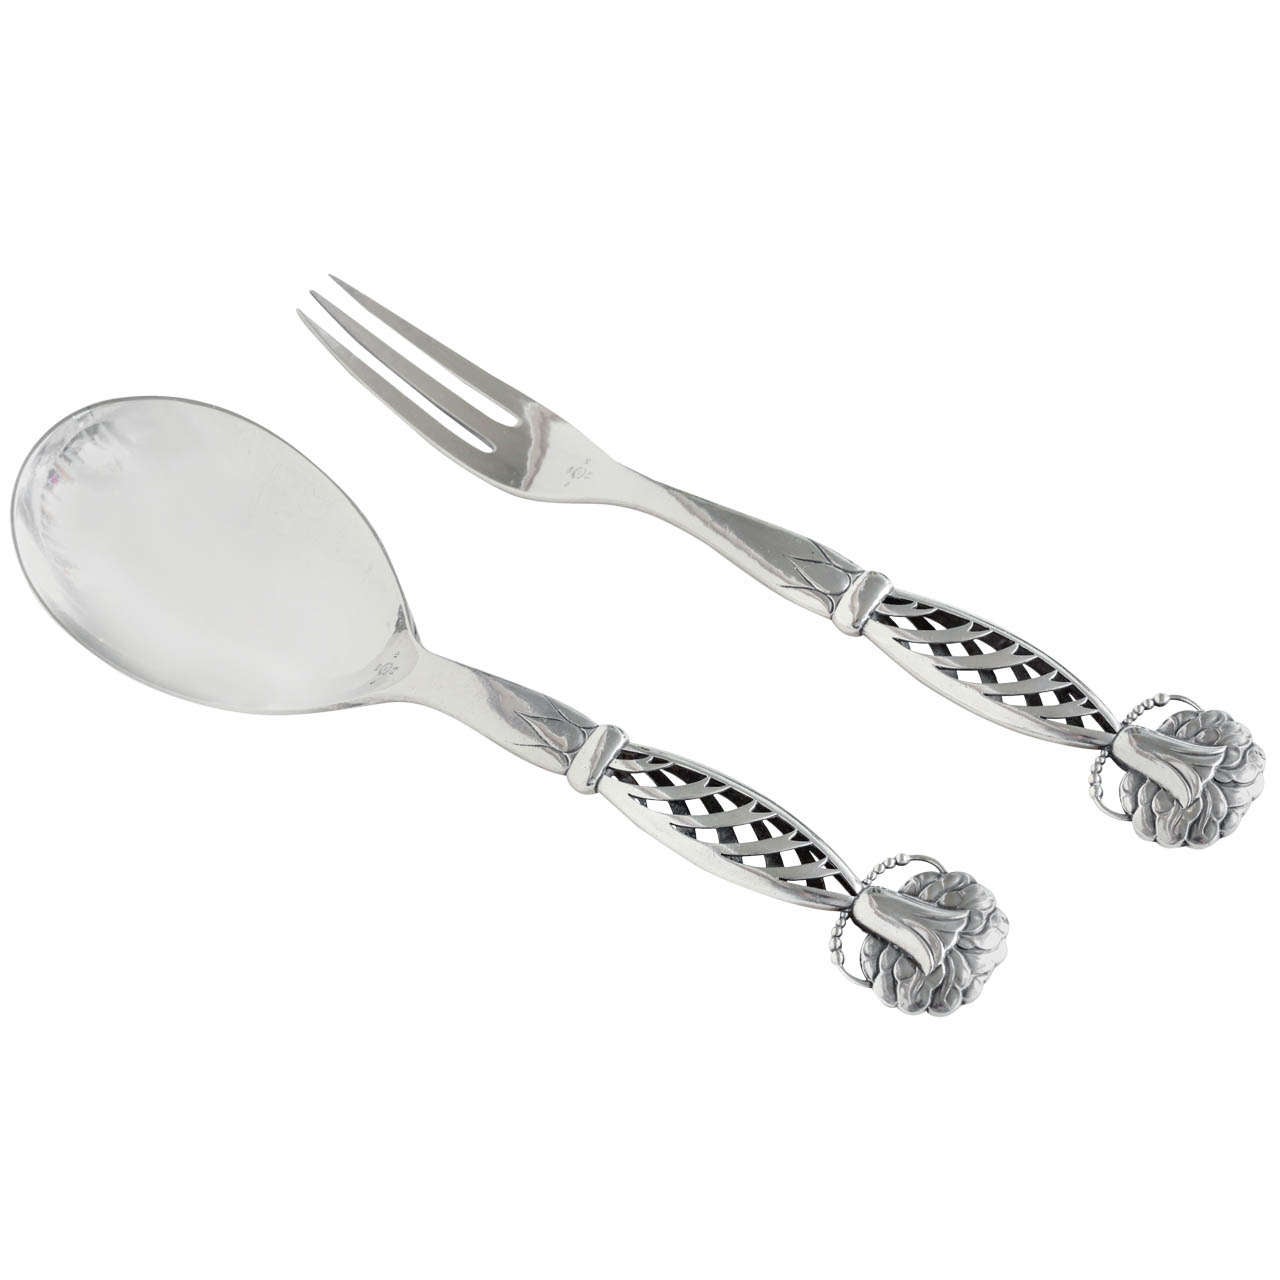 Georg Jensen Sterling Silver Fork and Spoon Serving Set #83